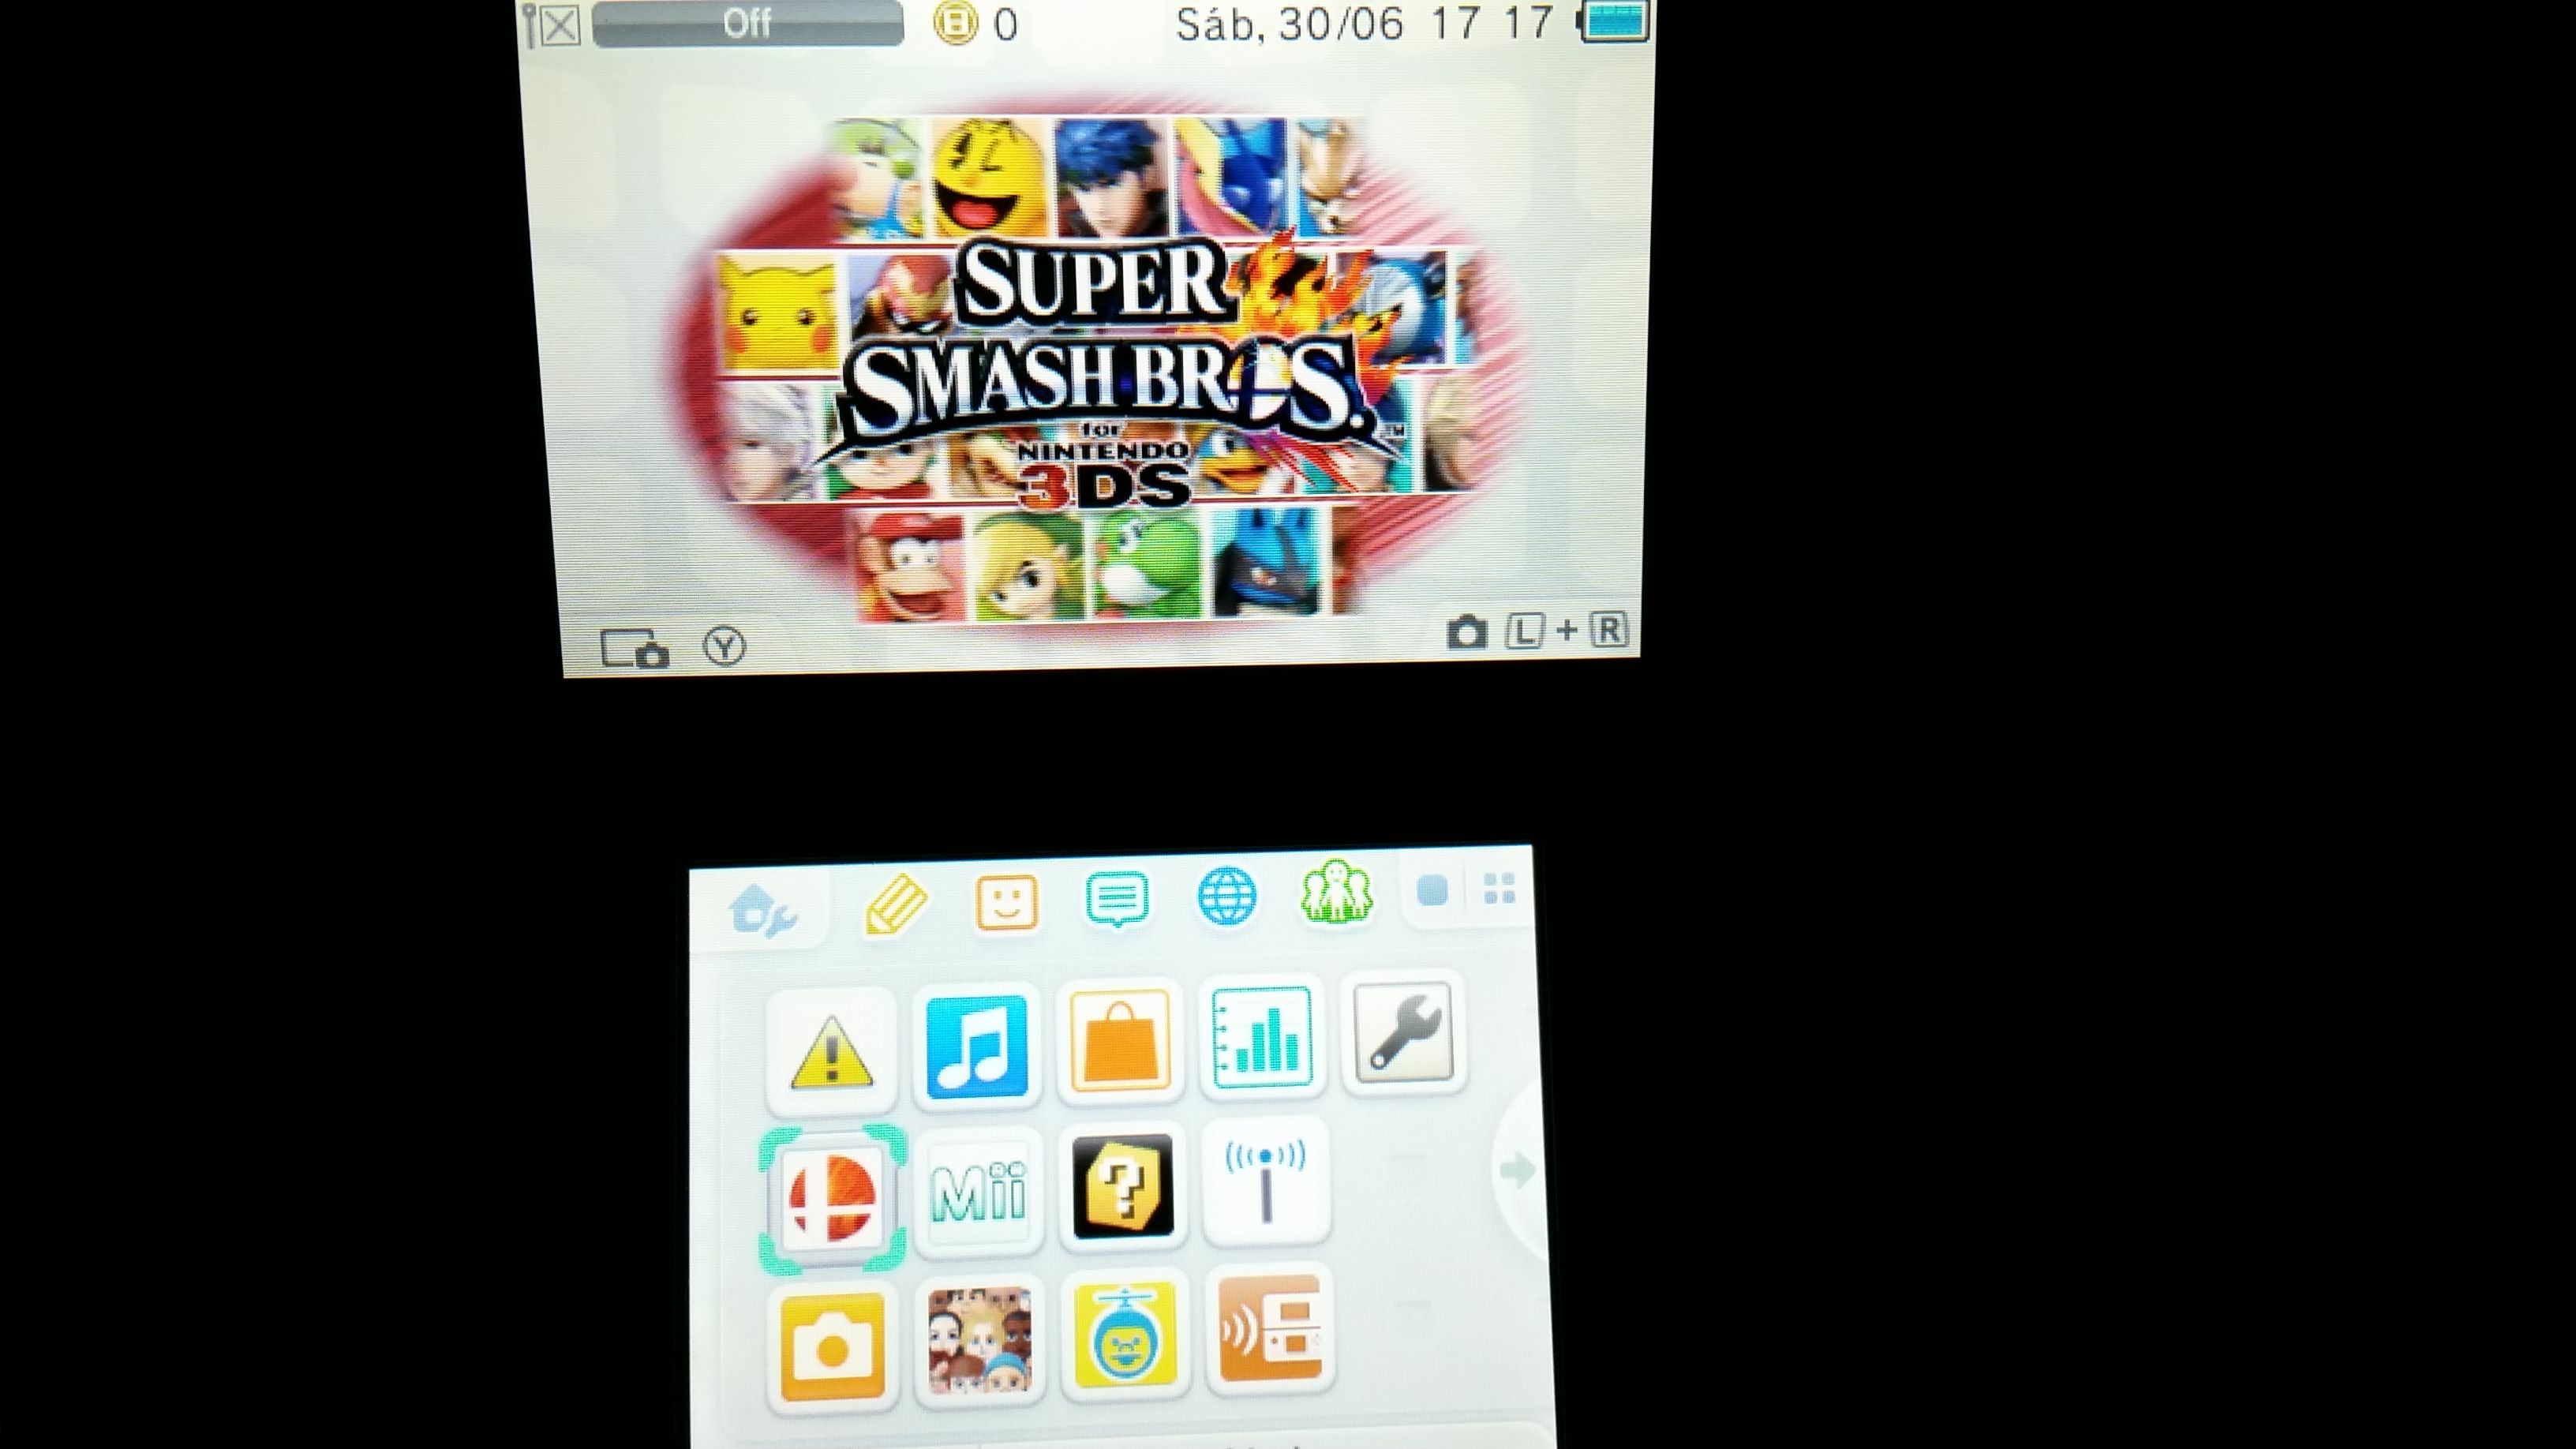 Super Smash Bros isn't working on my 3DS : r/Roms